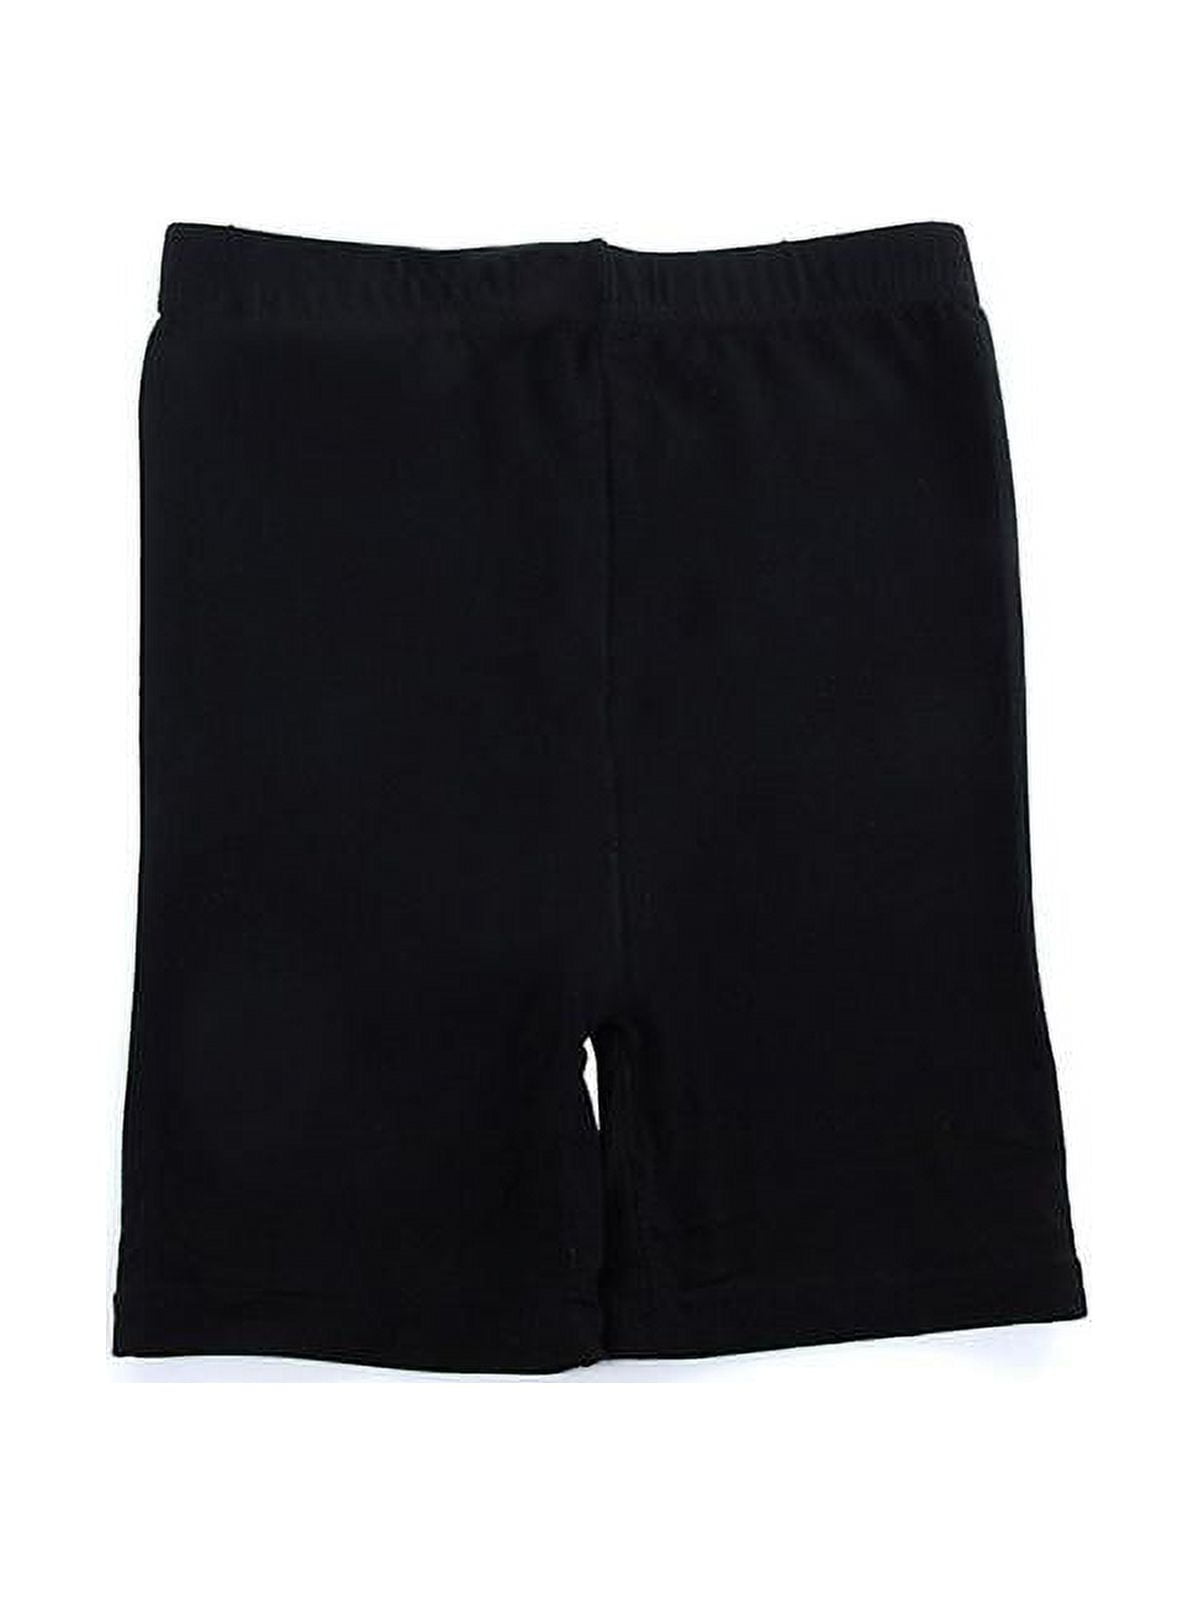 Kids Shorts Sports Pants Sportshort Short Leggings 1/2 Cotton Boys Girls |  eBay